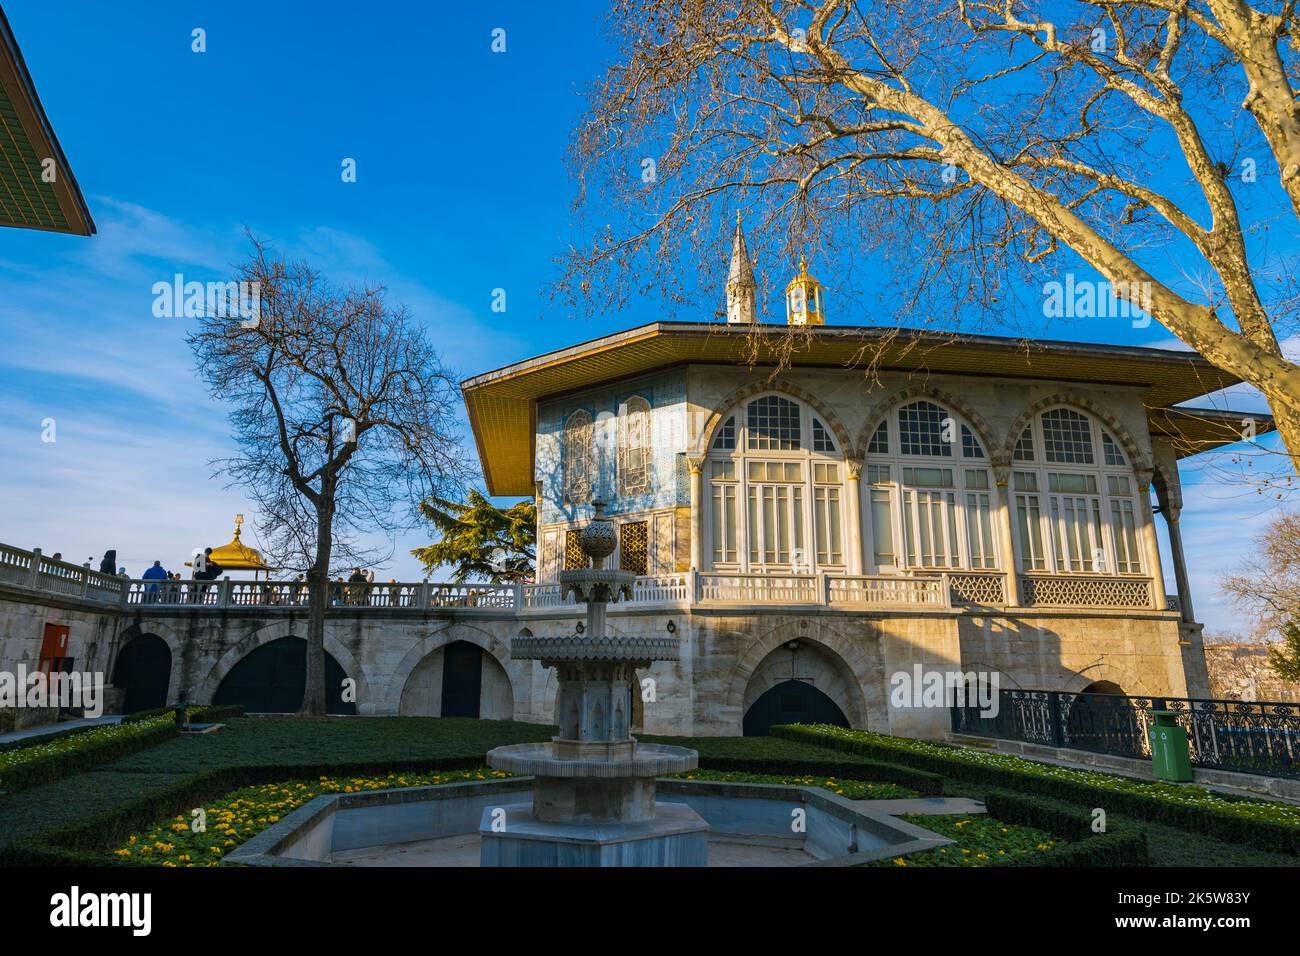 Baghdad pavillion or Bagdat Kosku in Topkapi Palace. Landmarks of Istanbul background photo. Istanbul Turkey - 12.27.2021 Stock Photo